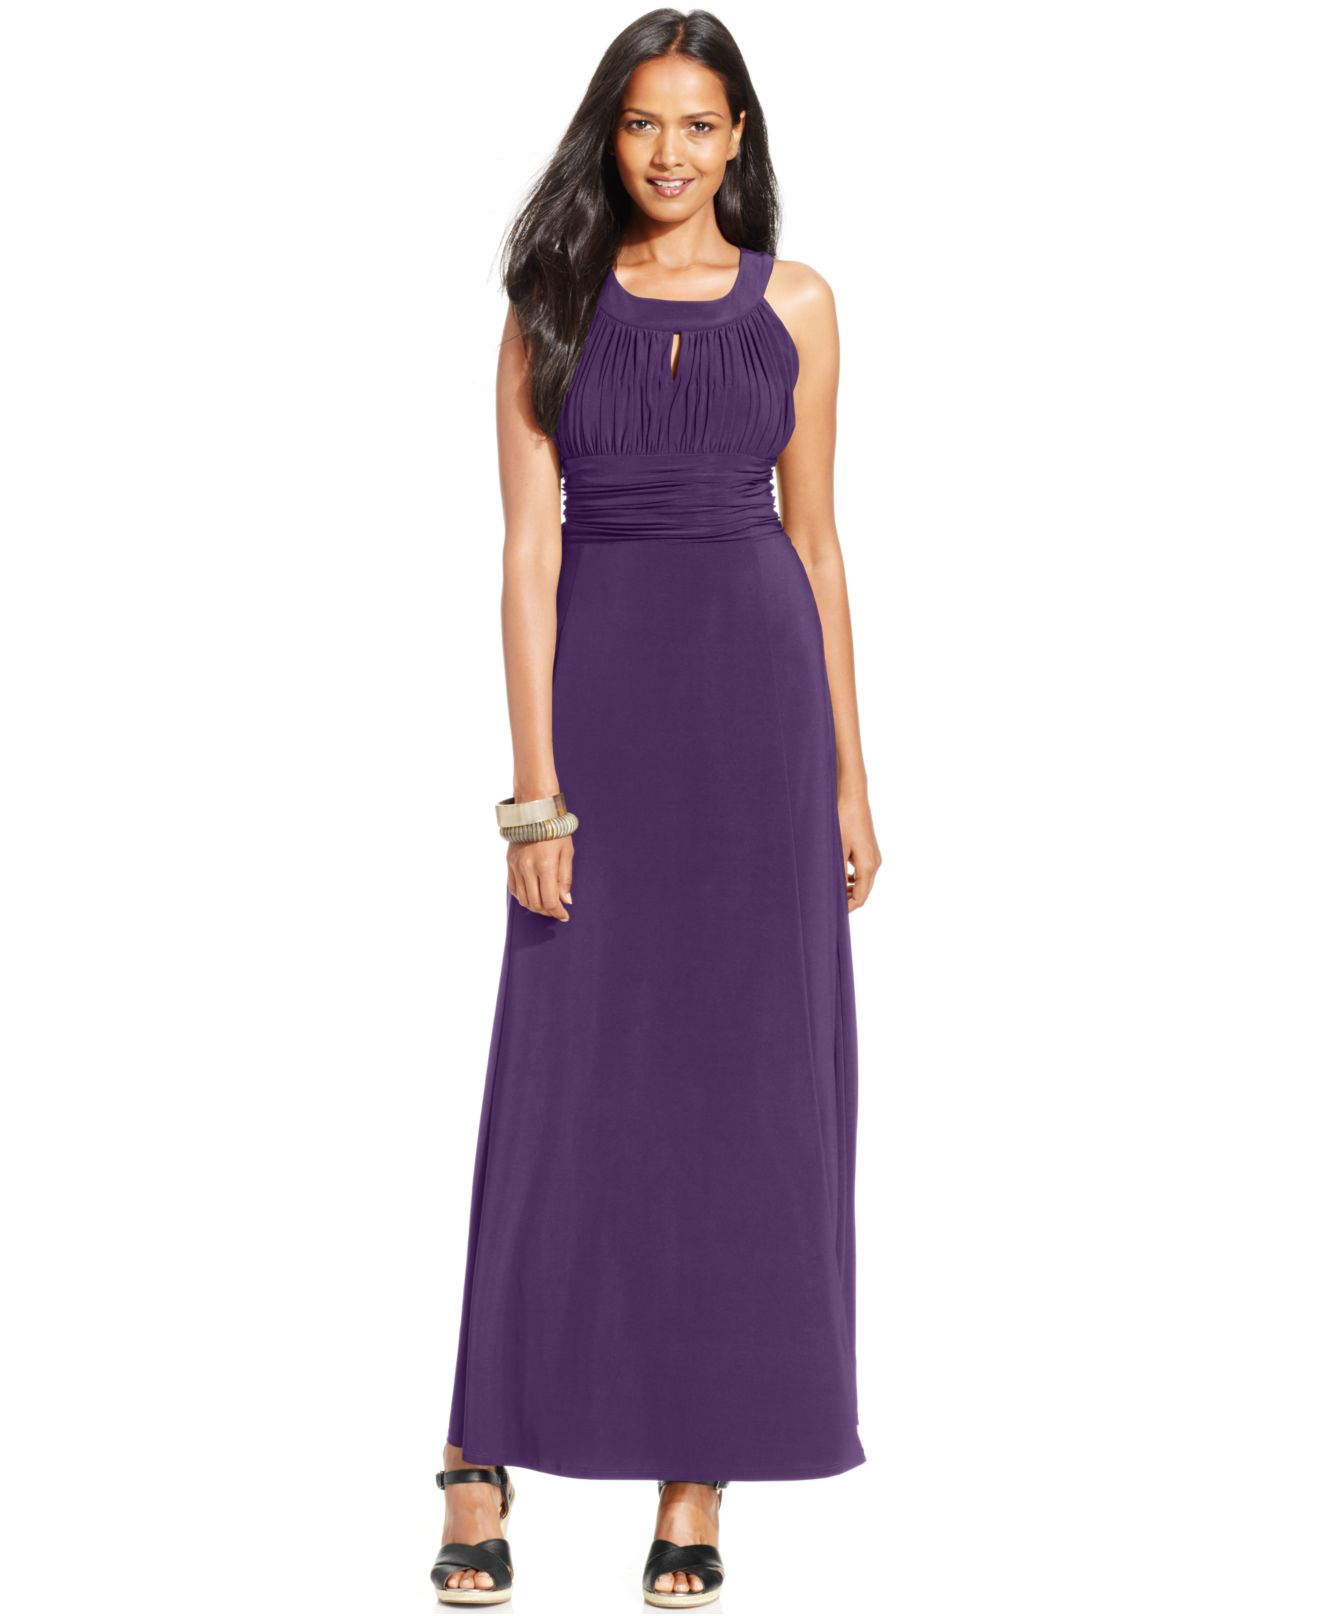 Macys purple dress